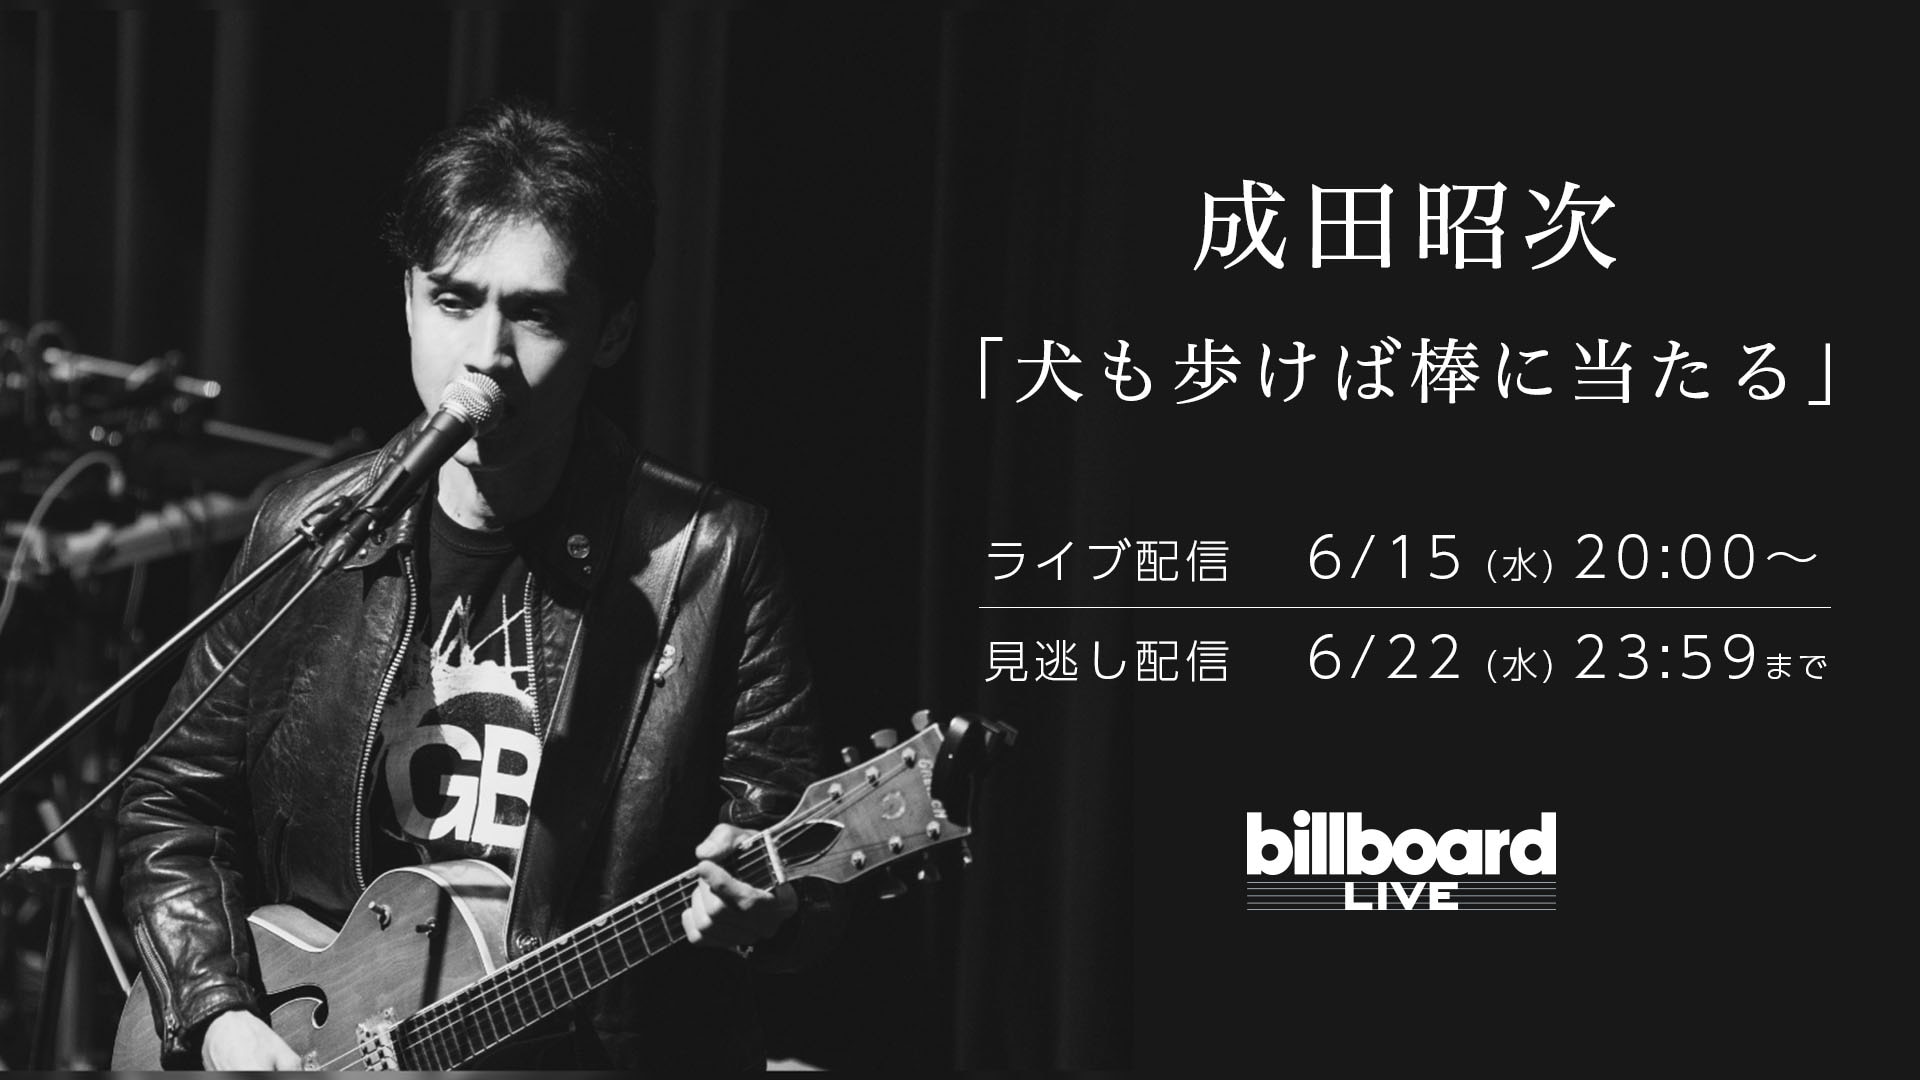 Billboard Live『成田昭次「犬も歩けば棒に当たる」』 | ライブ配信